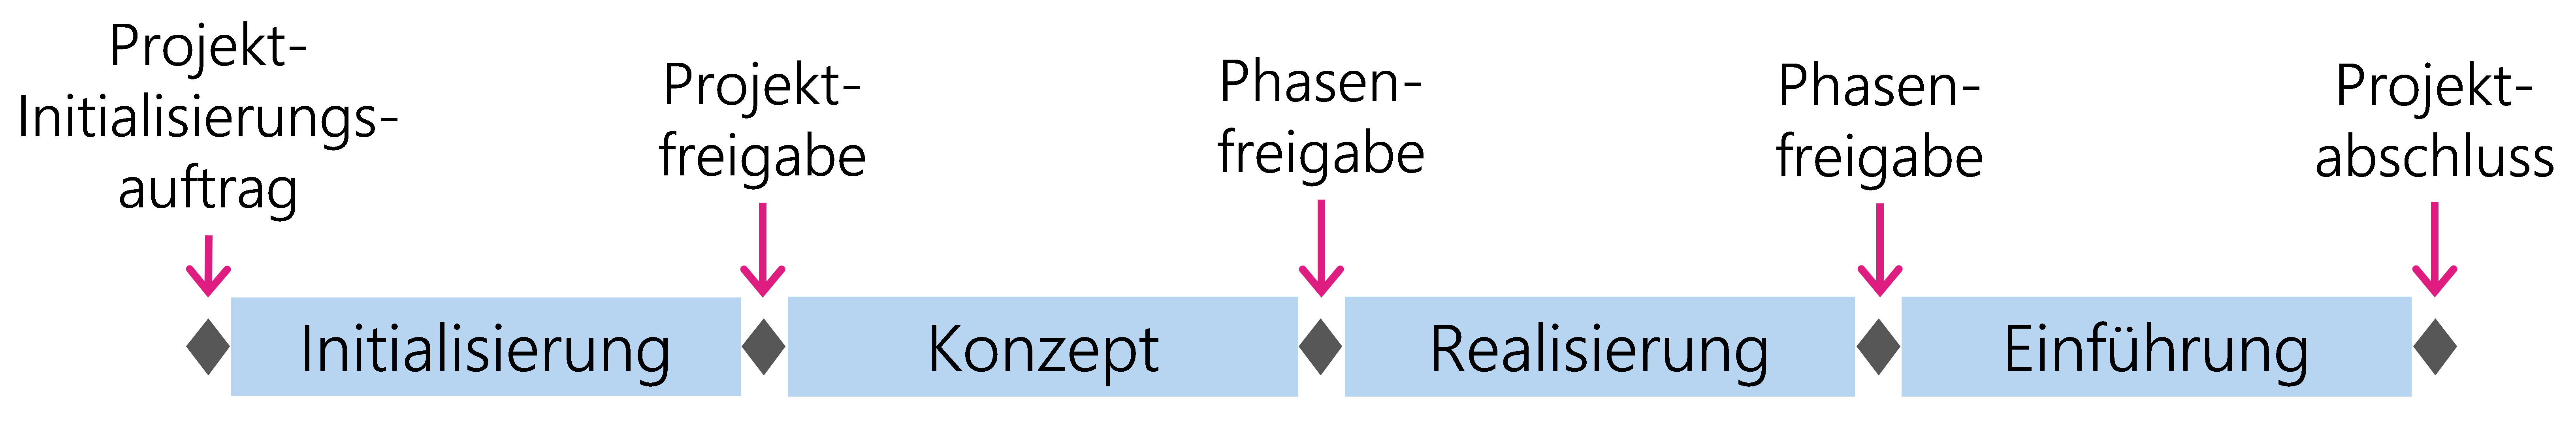 Abbildung 16: Die vier Phasen des HERMES-Phasenmodells